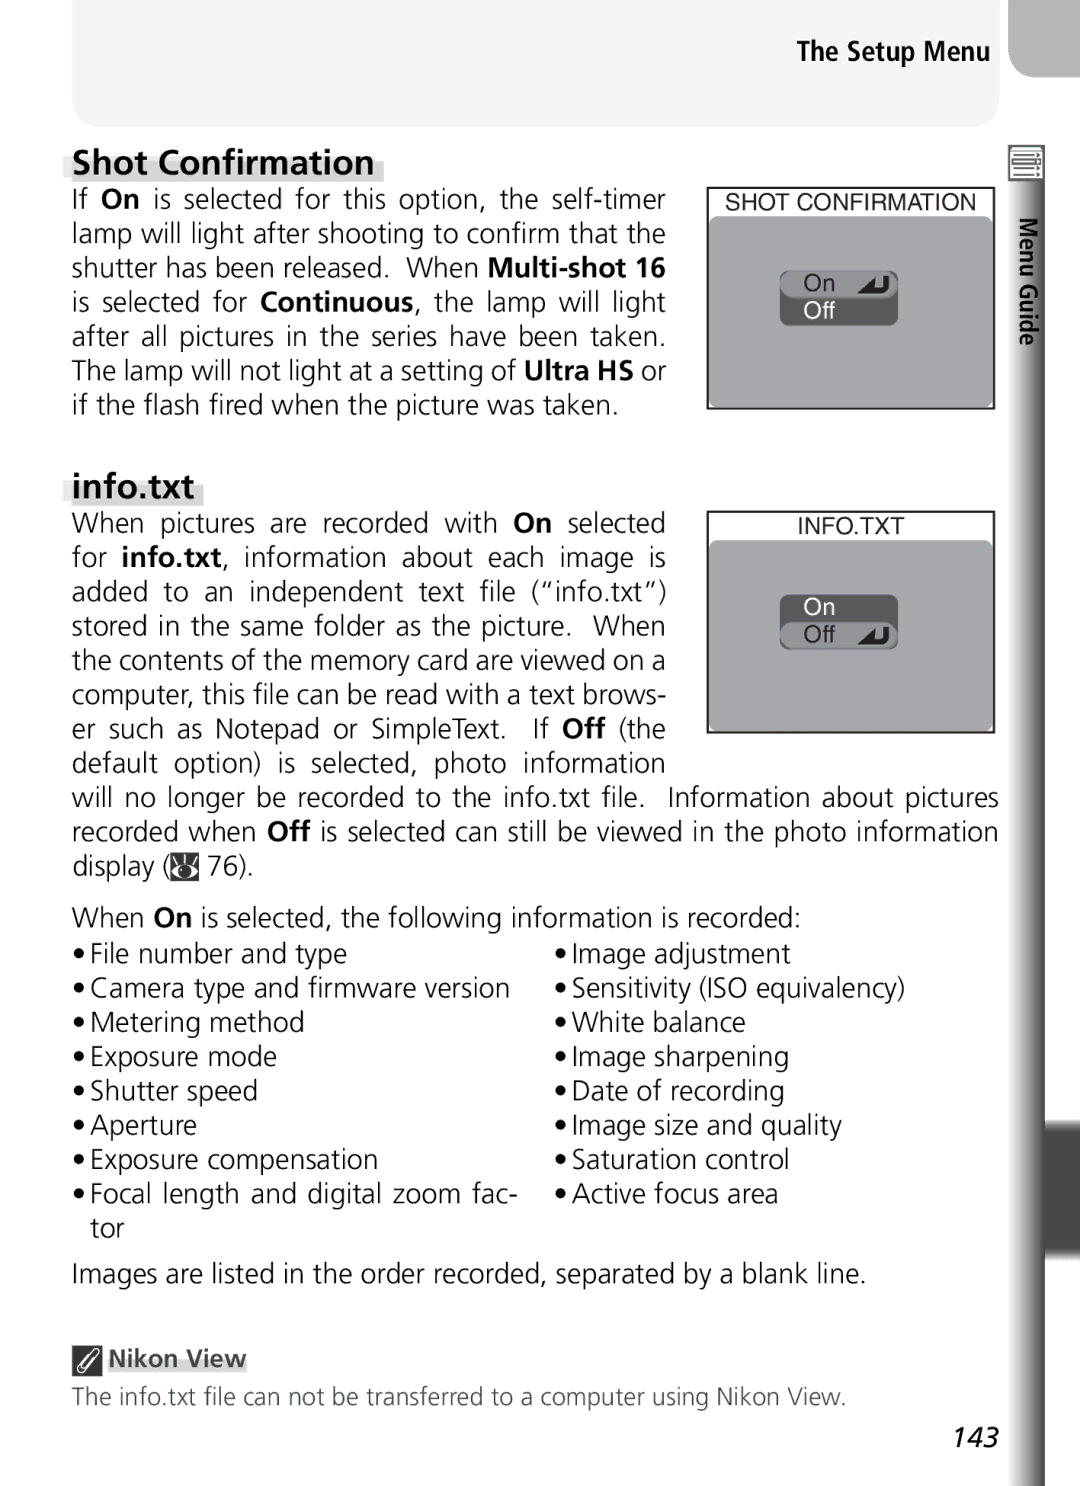 Nikon COOLPIX5400 manual Shot Conﬁrmation, Info.txt, Sensitivity ISO equivalency, Nikon View 